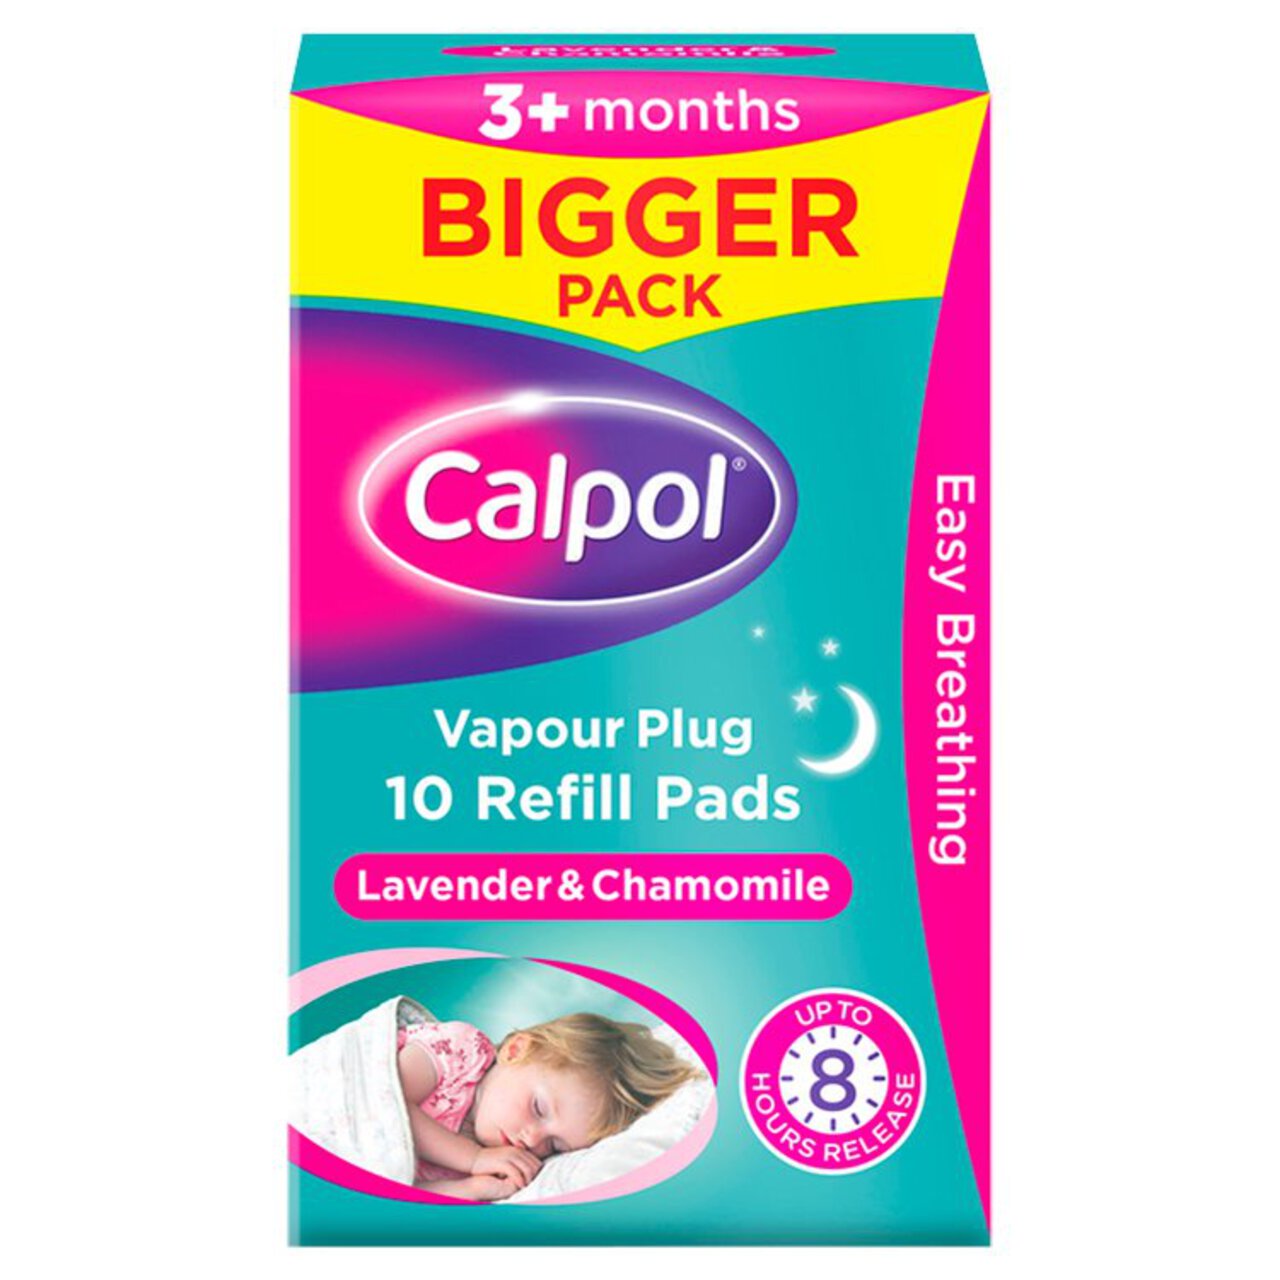 Calpol Vapour Plug Refill Pads 10 per pack